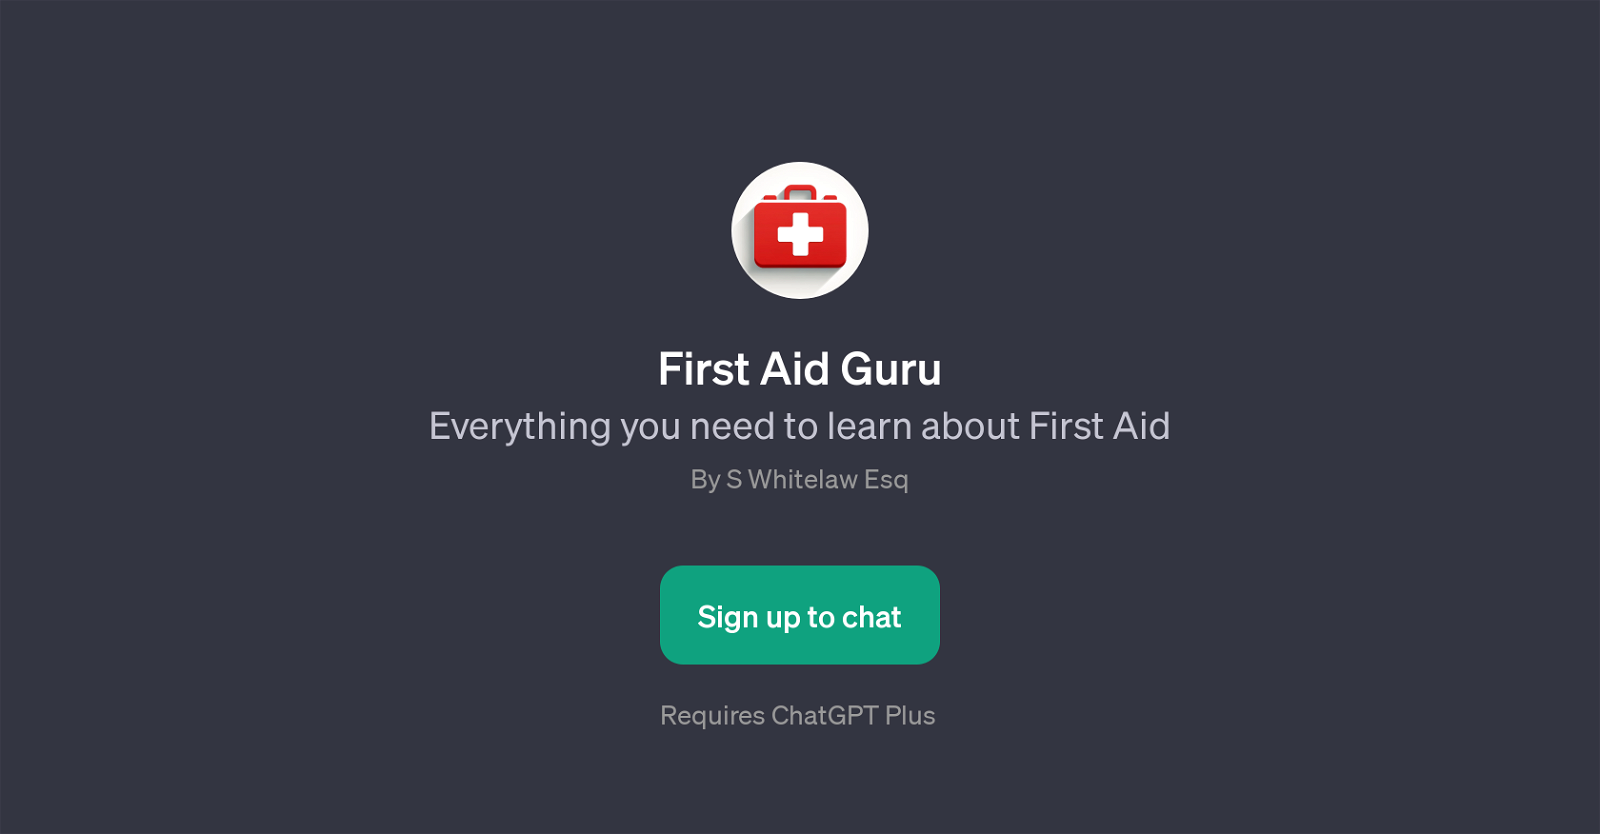 First Aid Guru website